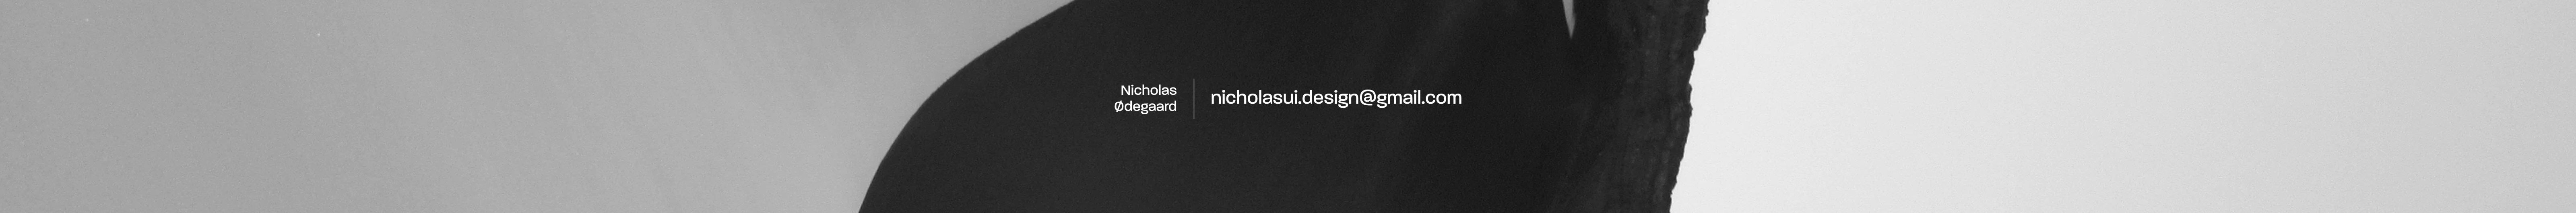 Nicholas Ergemla's profile banner